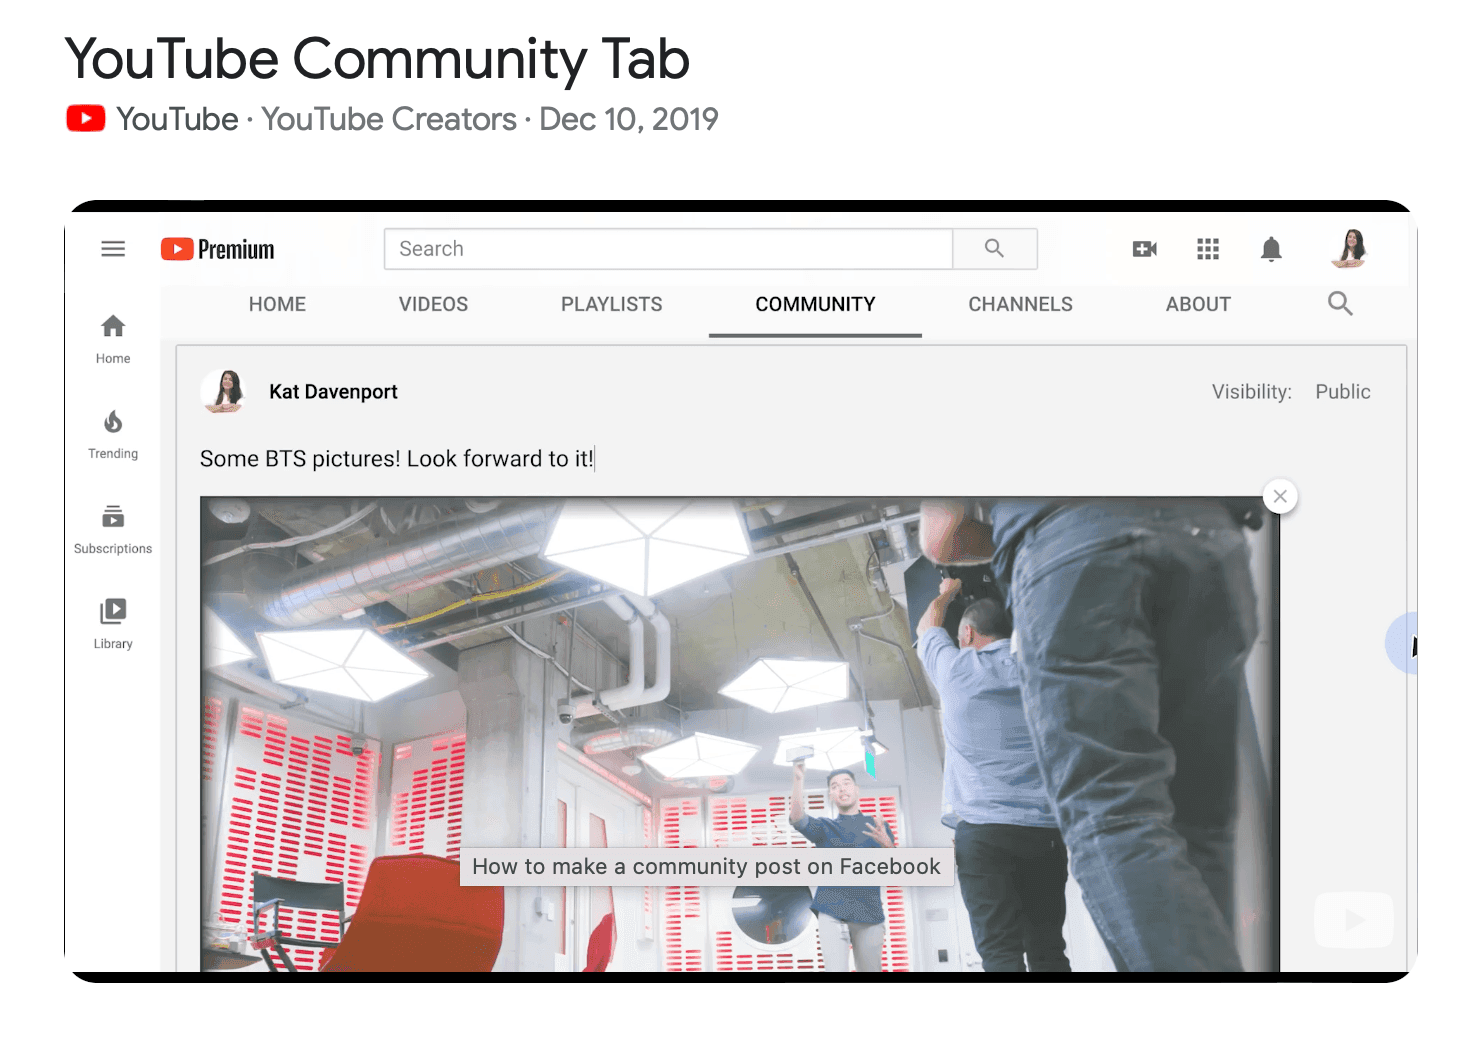 YouTube community video tab